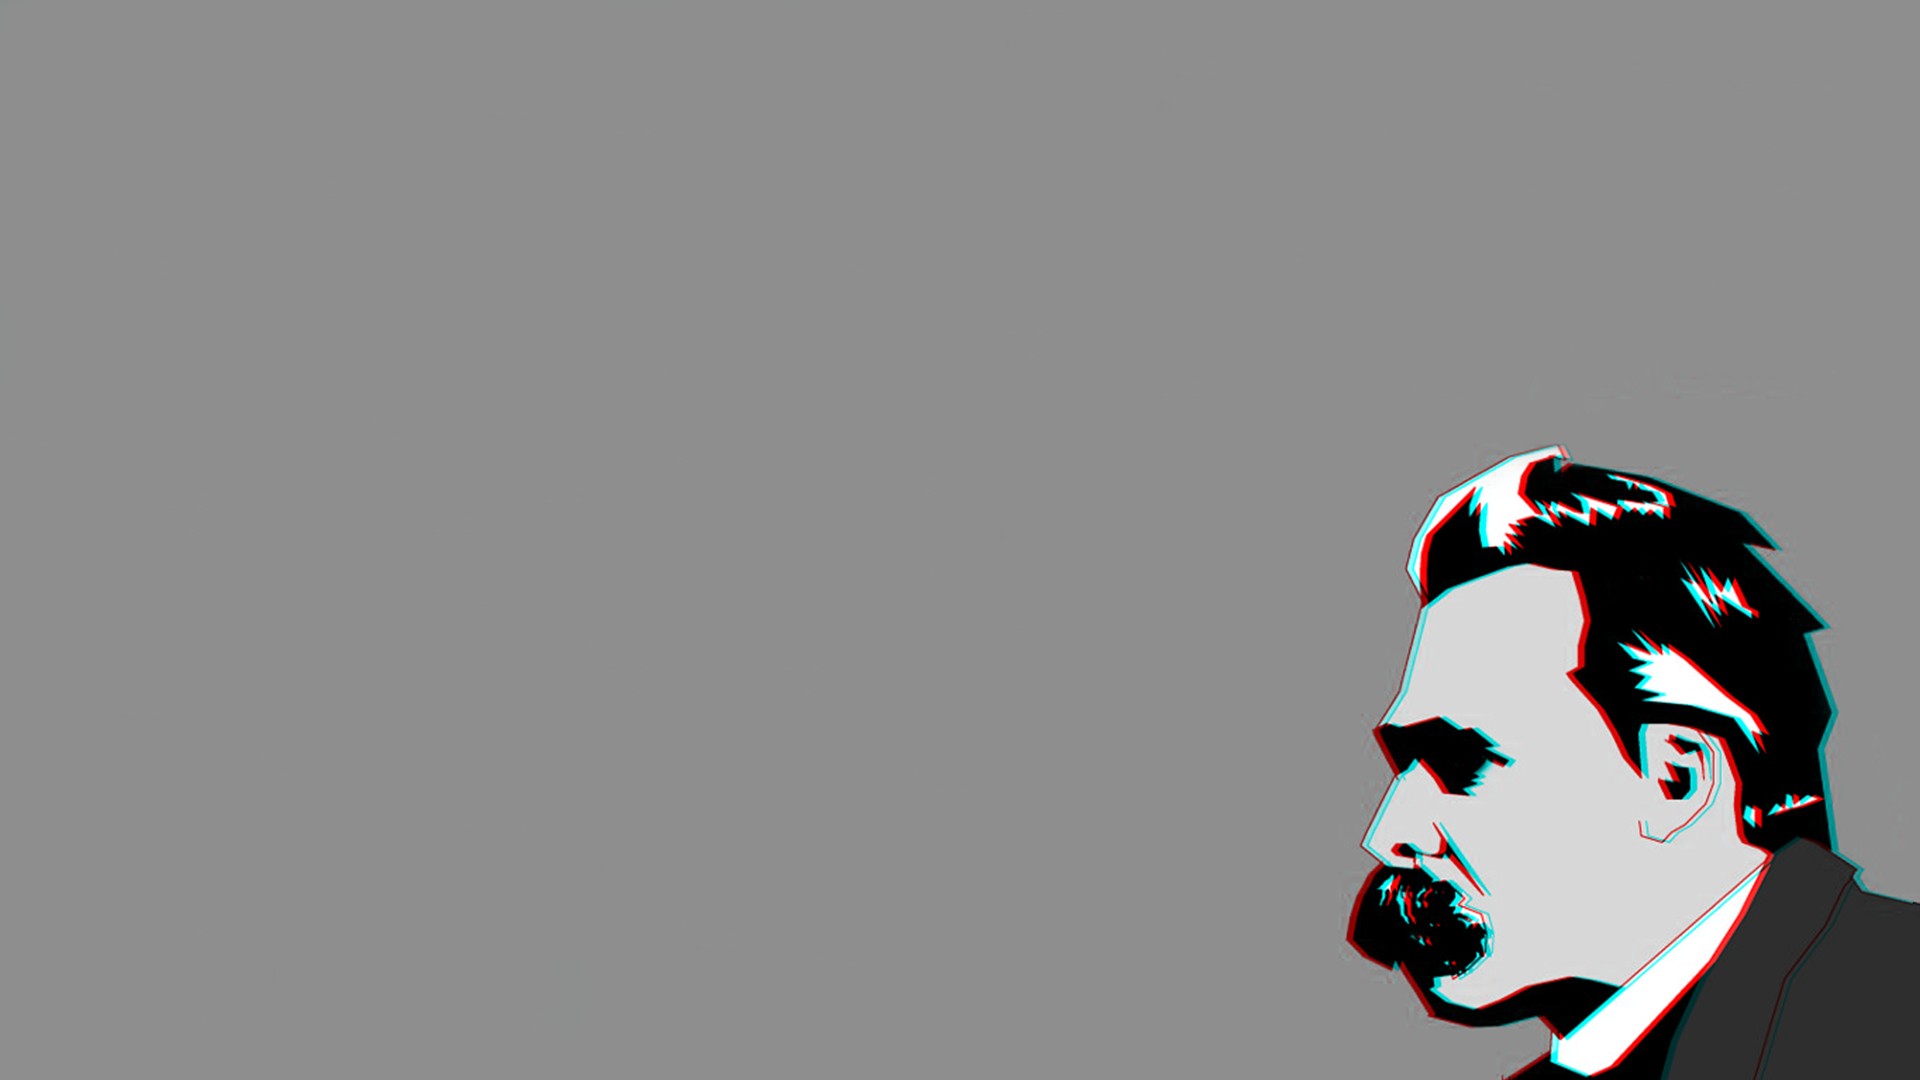 Friedrich Nietzsche, Philosophers, Chromatic aberration, Simple background Wallpaper